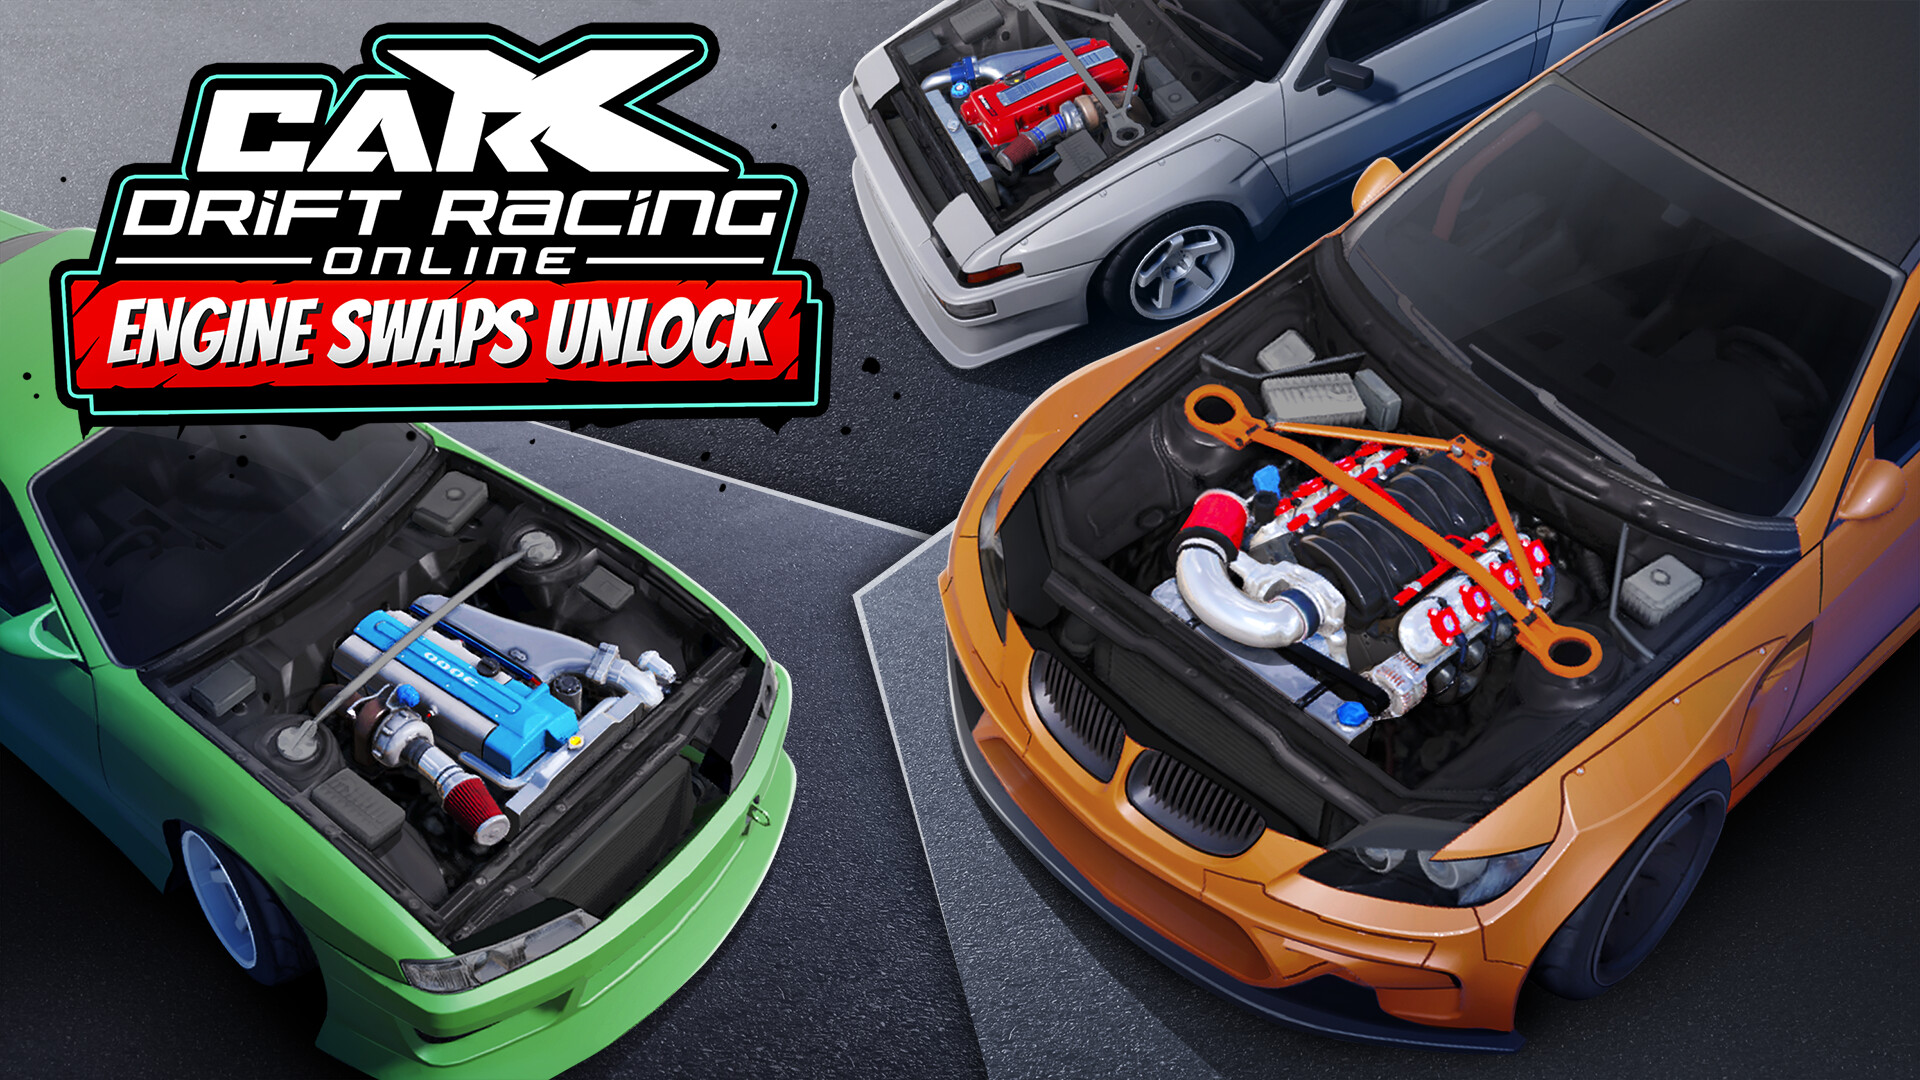 CarX Drift Racing Online - Engine Swaps Unlock Featured Screenshot #1